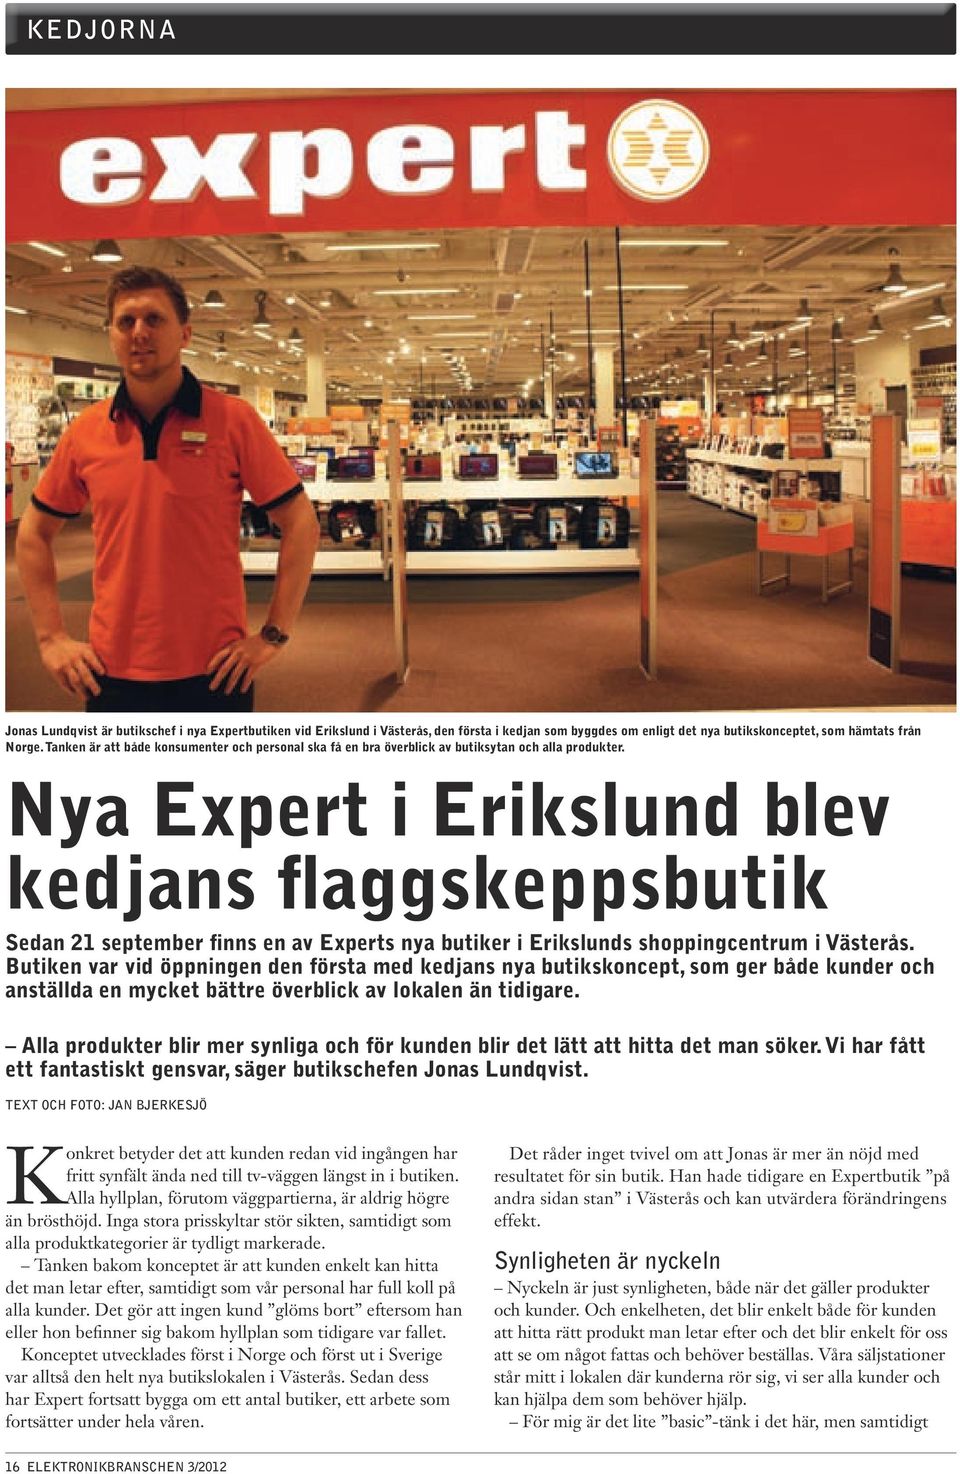 Nya Expert i Erikslund blev kedjans flaggskeppsbutik Sedan 21 september finns en av Experts nya butiker i Erikslunds shoppingcentrum i Västerås.